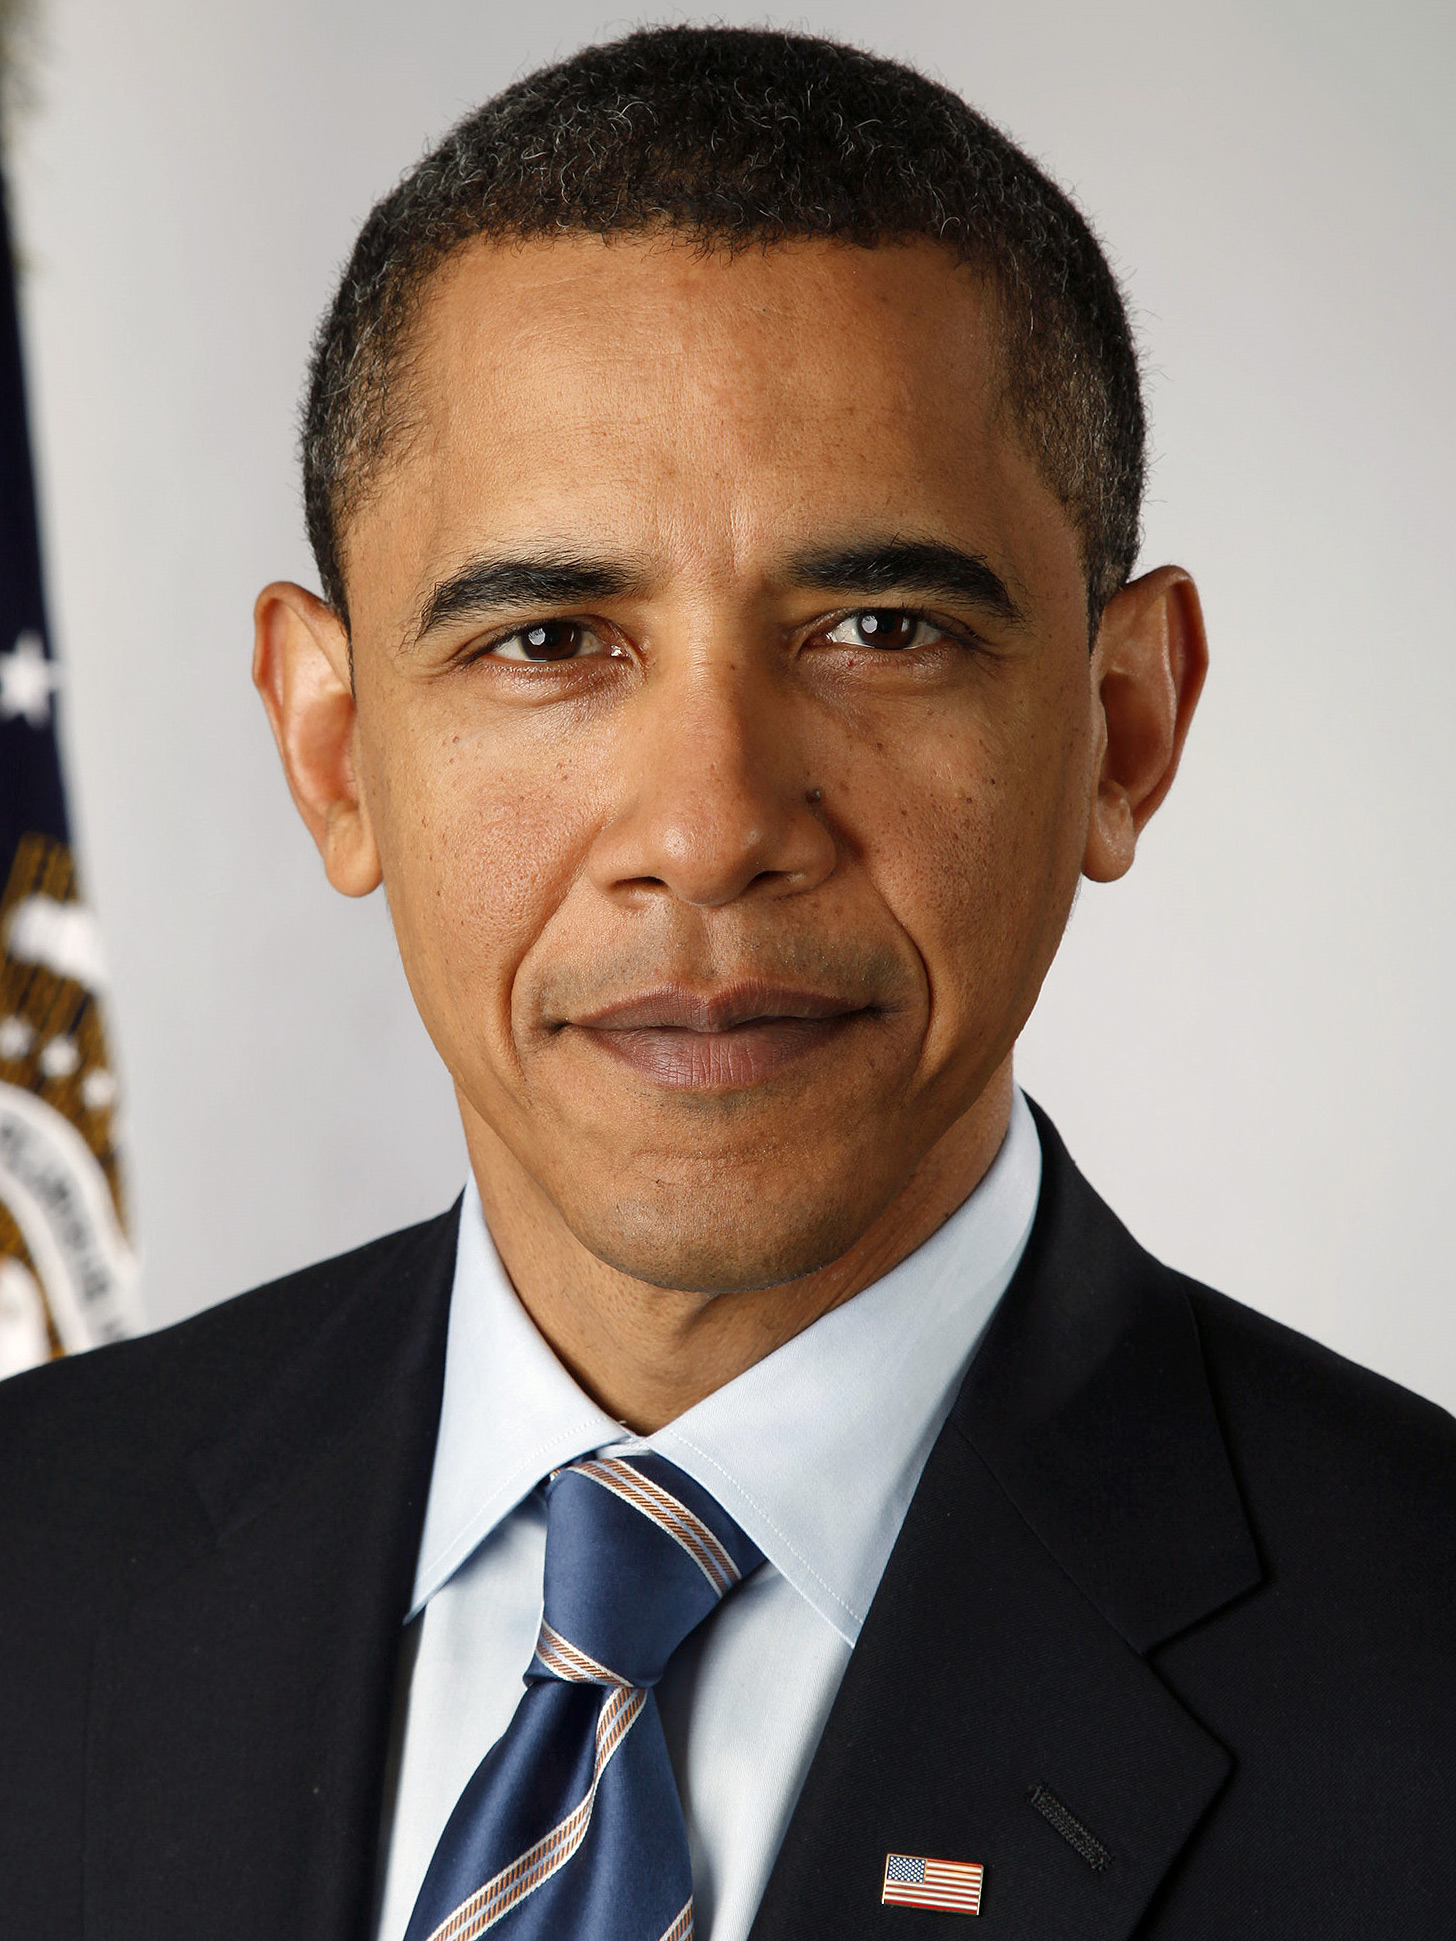 Datei:Obama.jpg